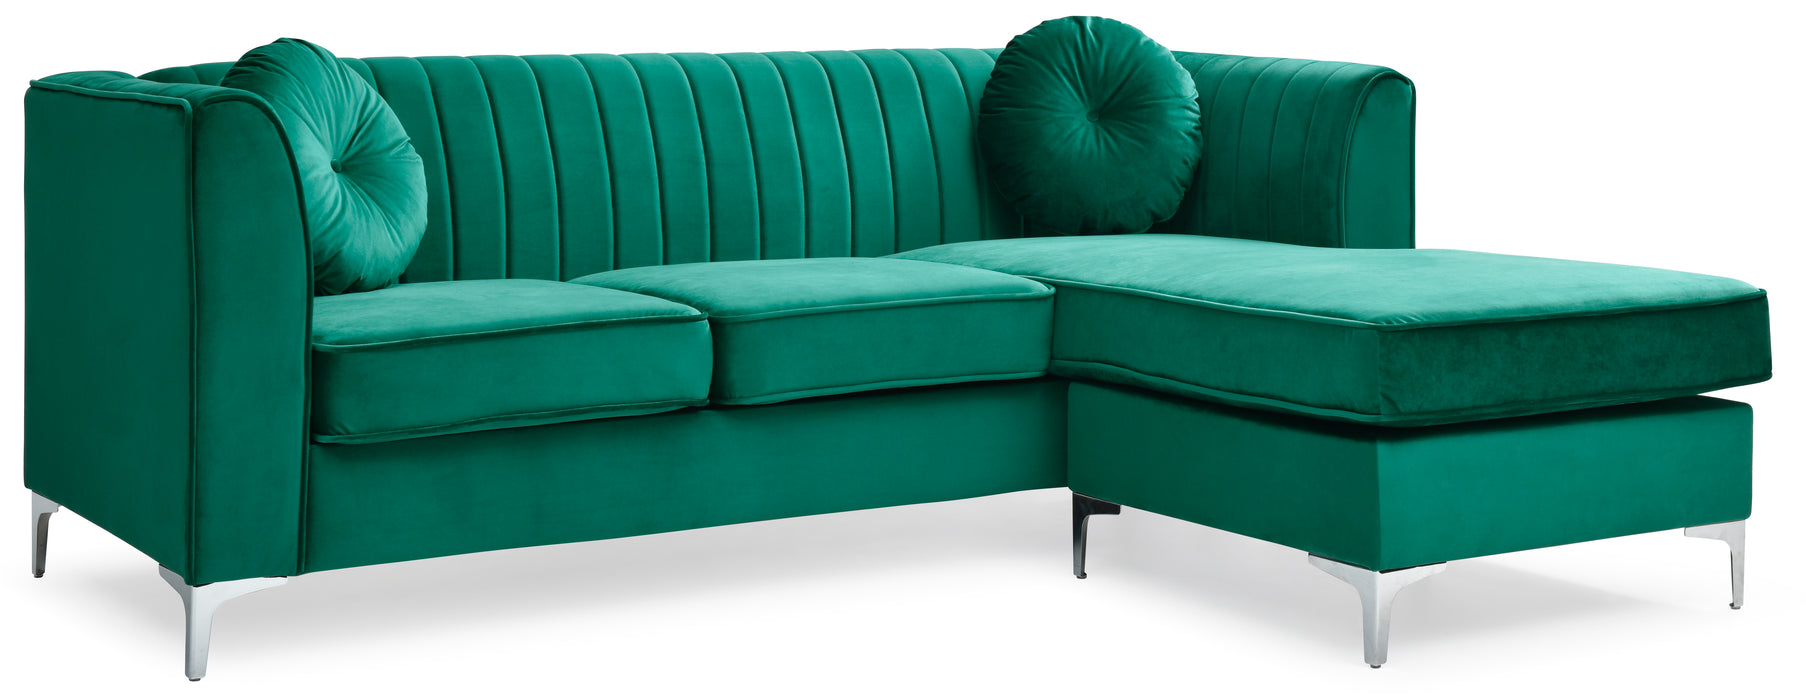 Glory Furniture Pompano G781-9B-SC Sofa Chaise 